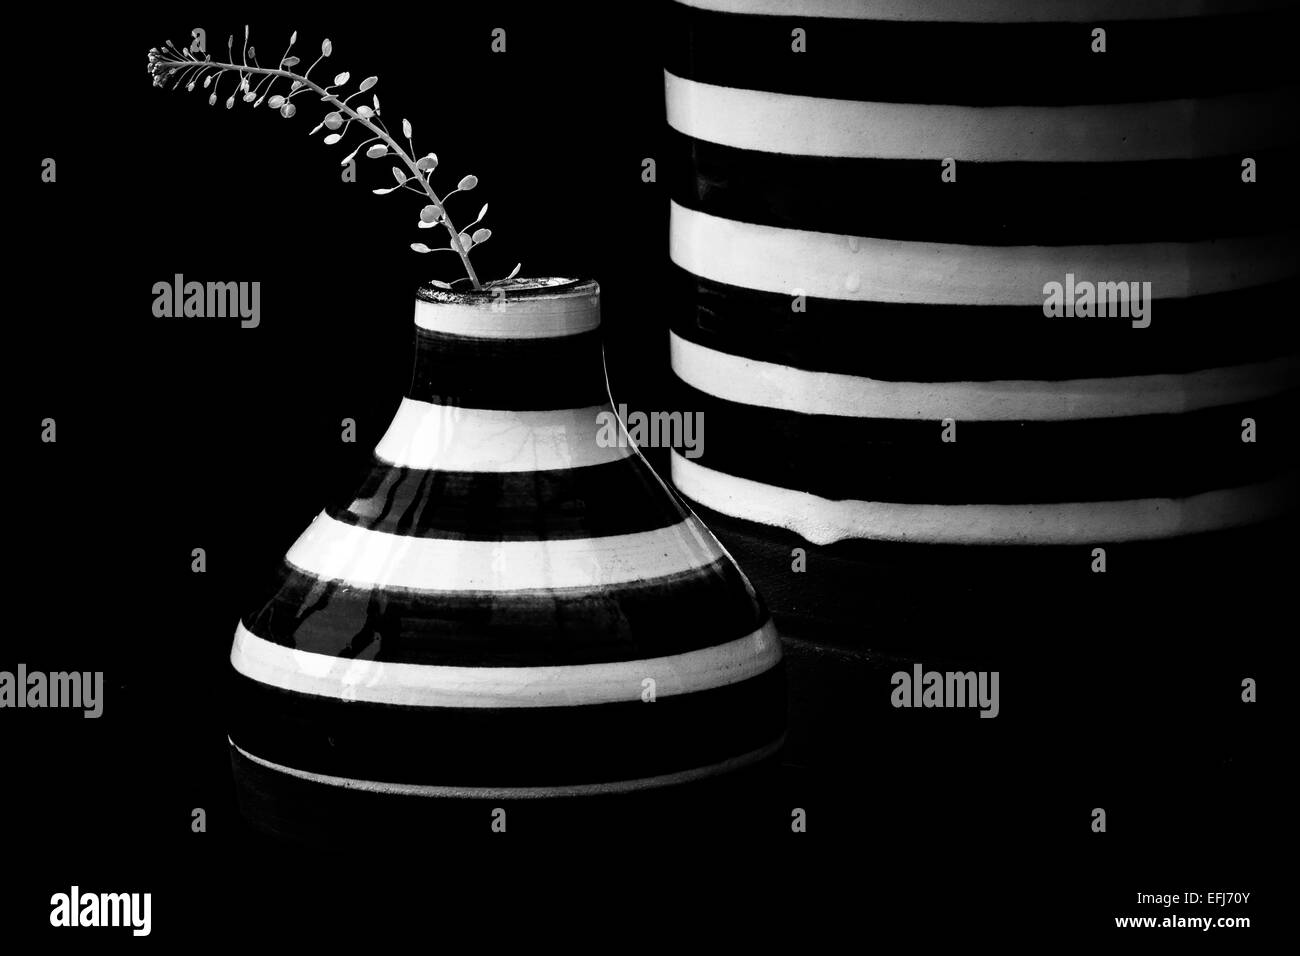 Striped vases Stock Photo